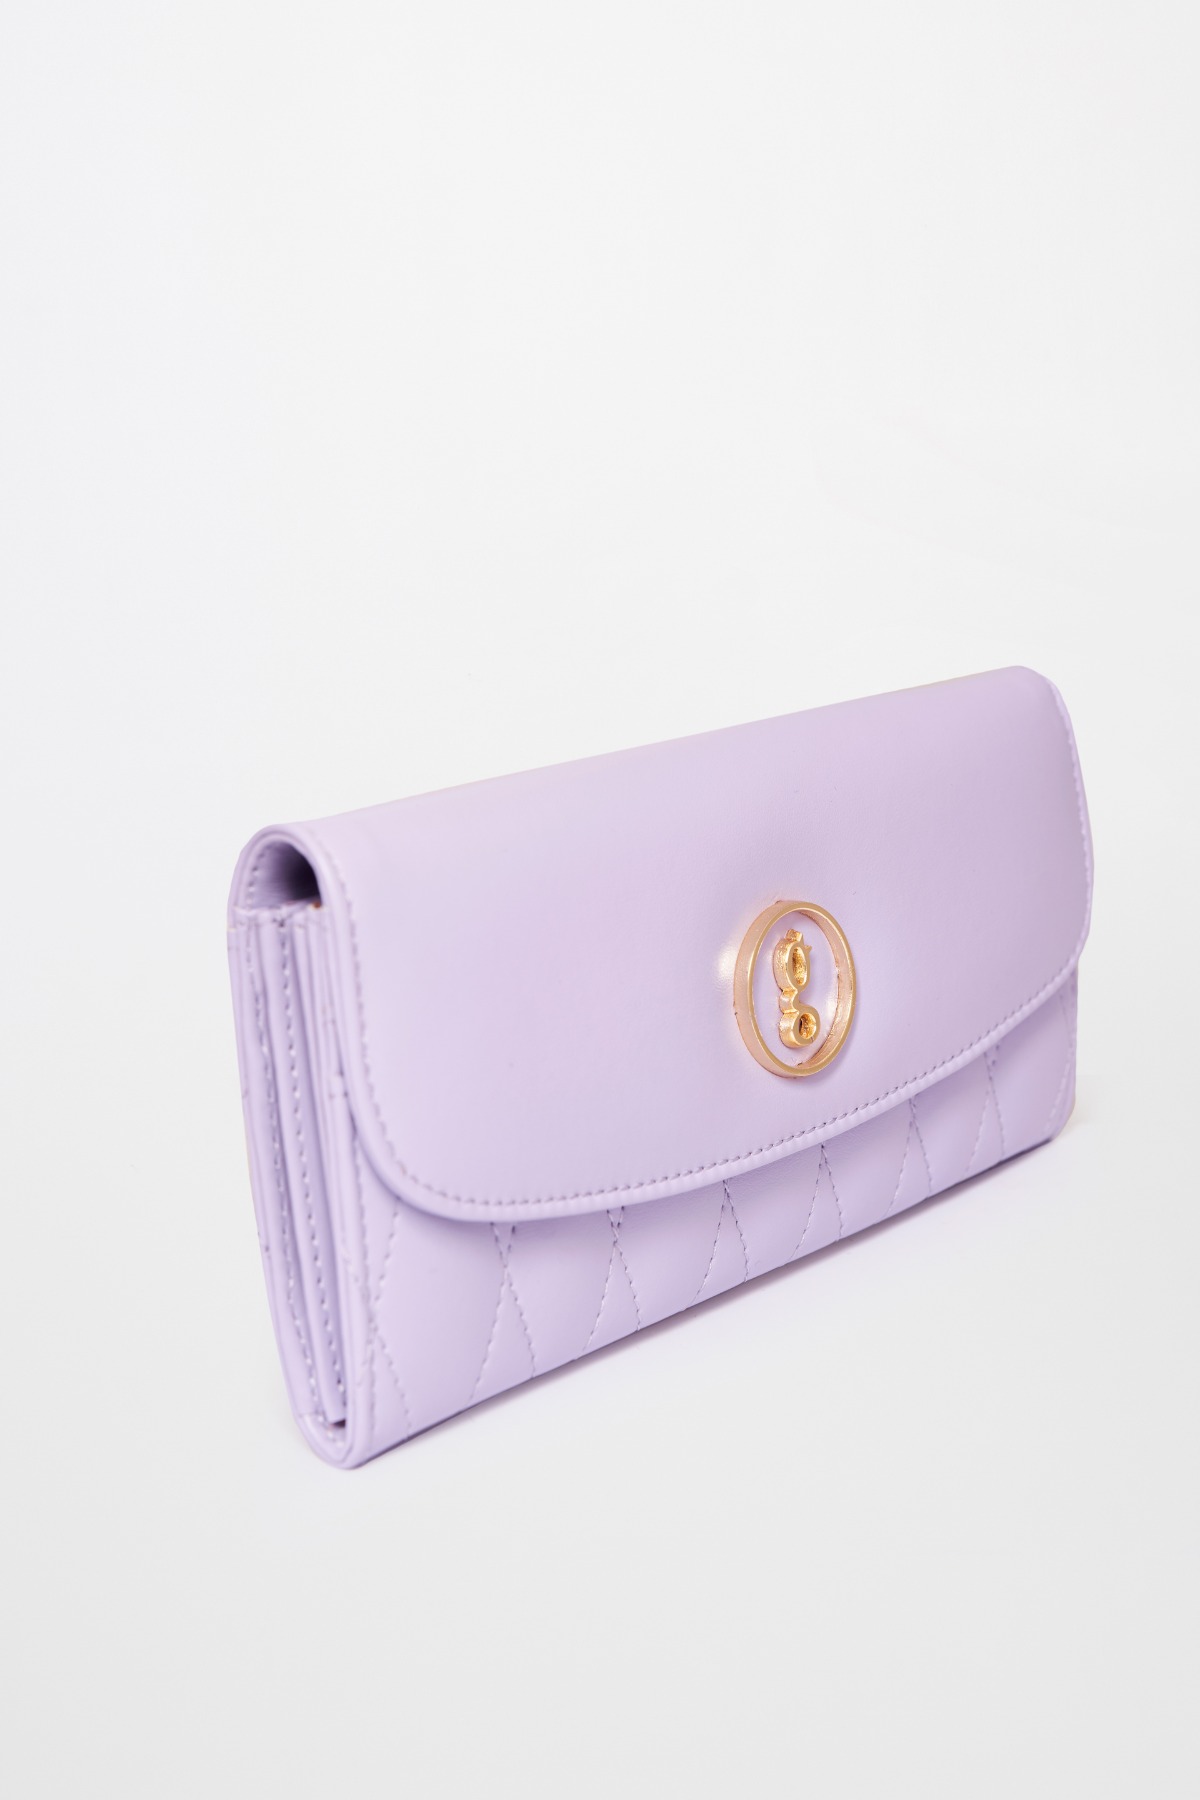 Handbags Phone Shoulder | Vertical Messenger Bags Women | Retro Shoulder Bag  Phone - Shoulder Bags - Aliexpress